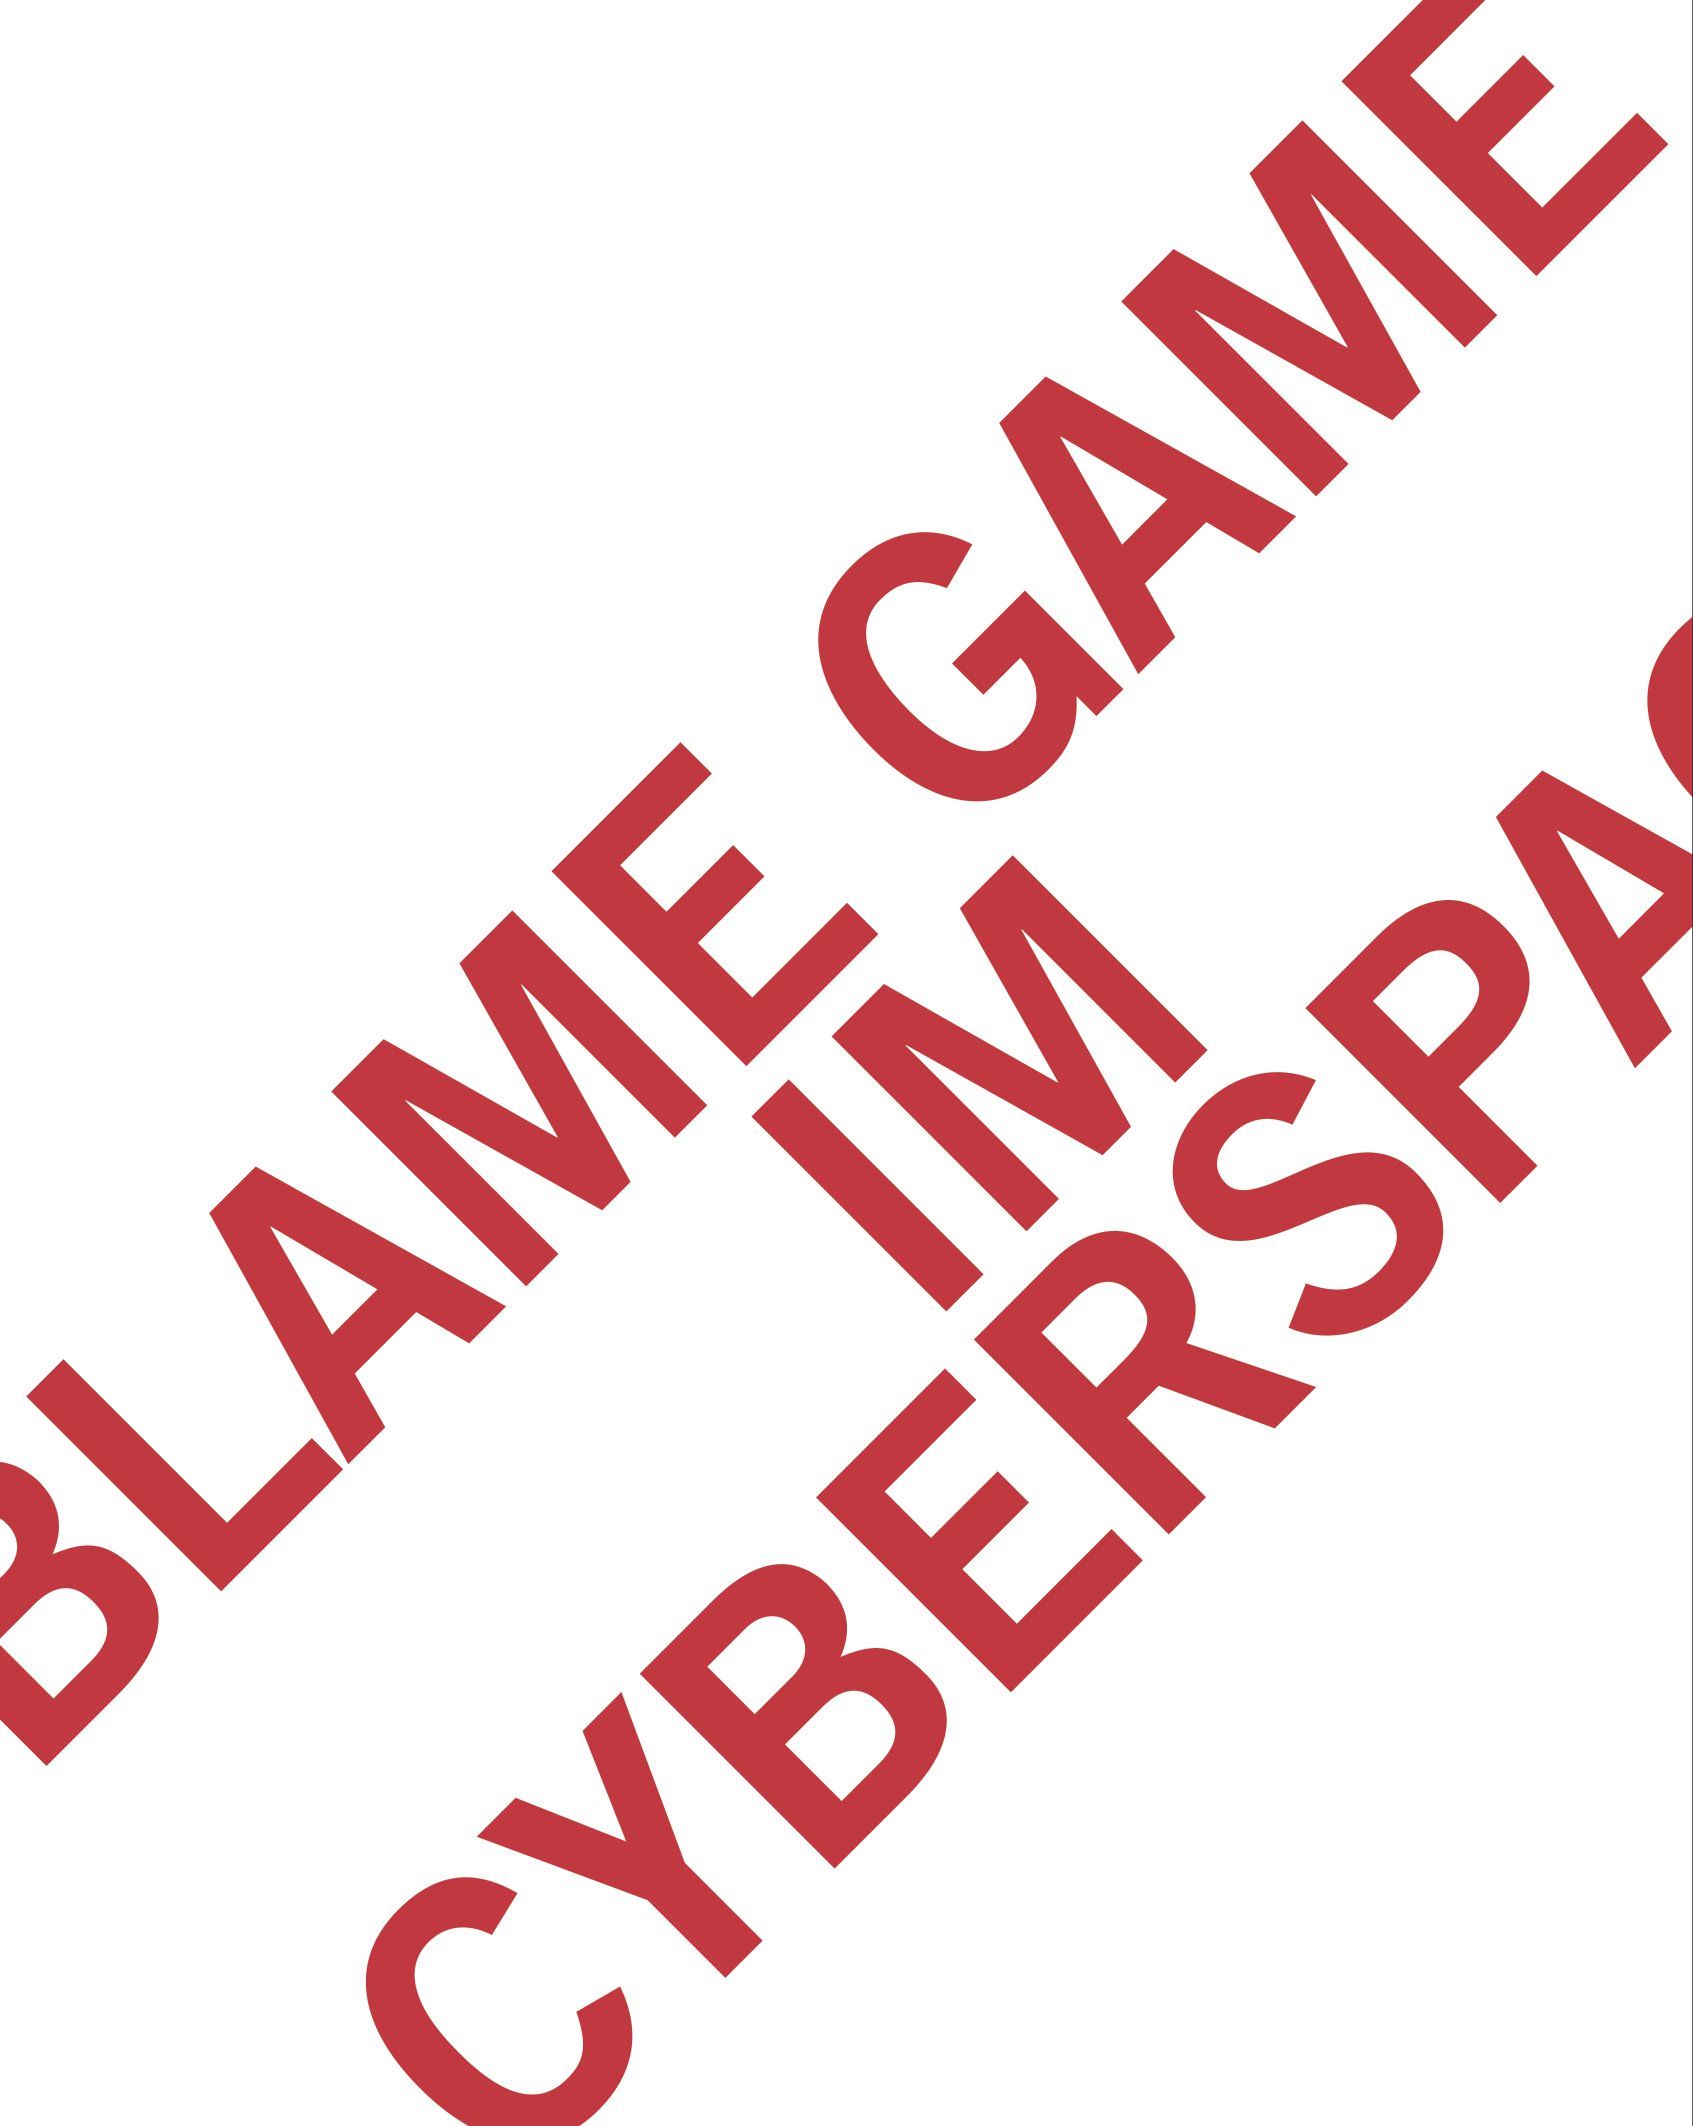 Blame Game im Cyberspace: Informationstechnik als Waffe?